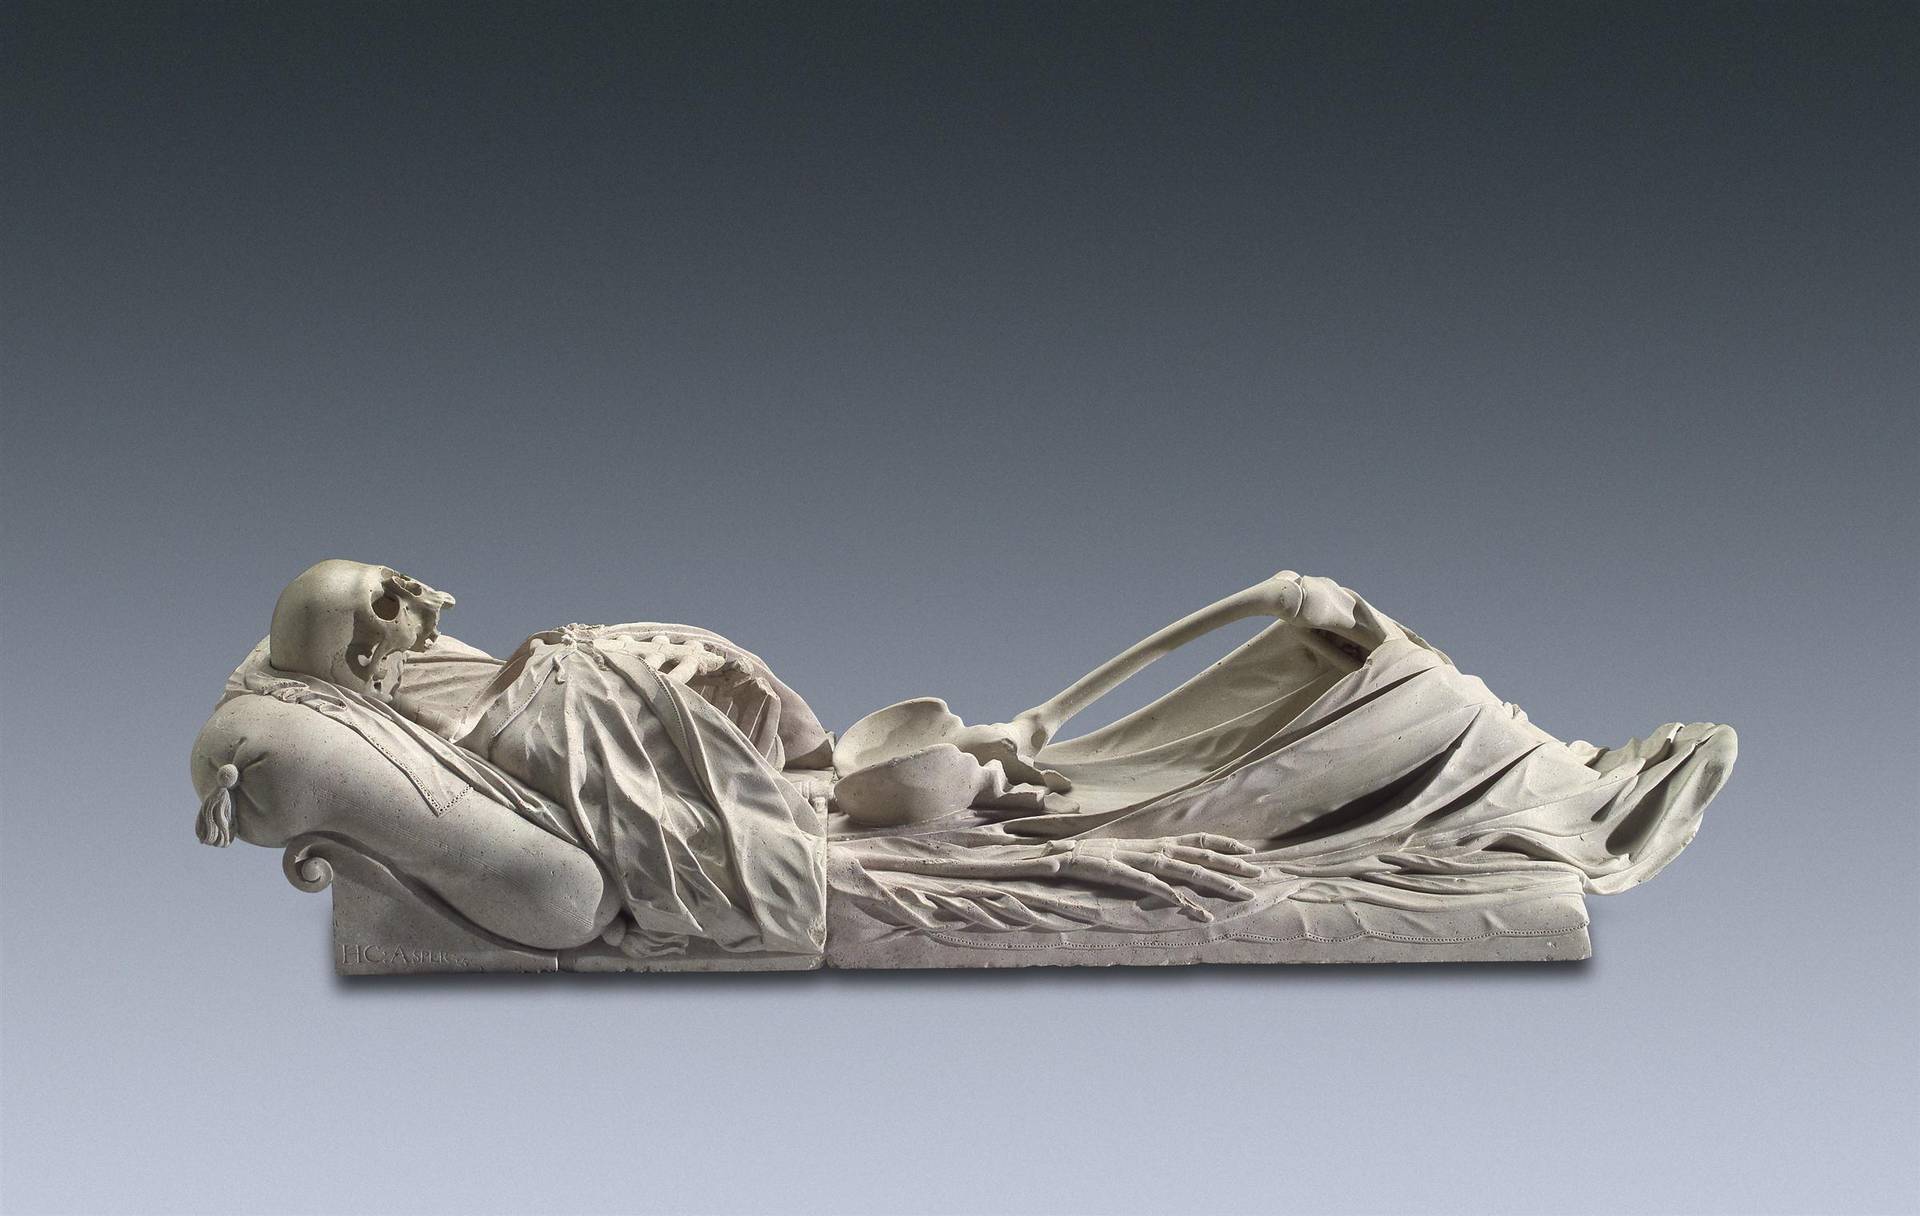 Tumbadeckel in Form eines Skeletts, Hans Conrad Asper, 1624, Untersberger Marmor, Salzburg Museum Inv.-Nr. 9240-49